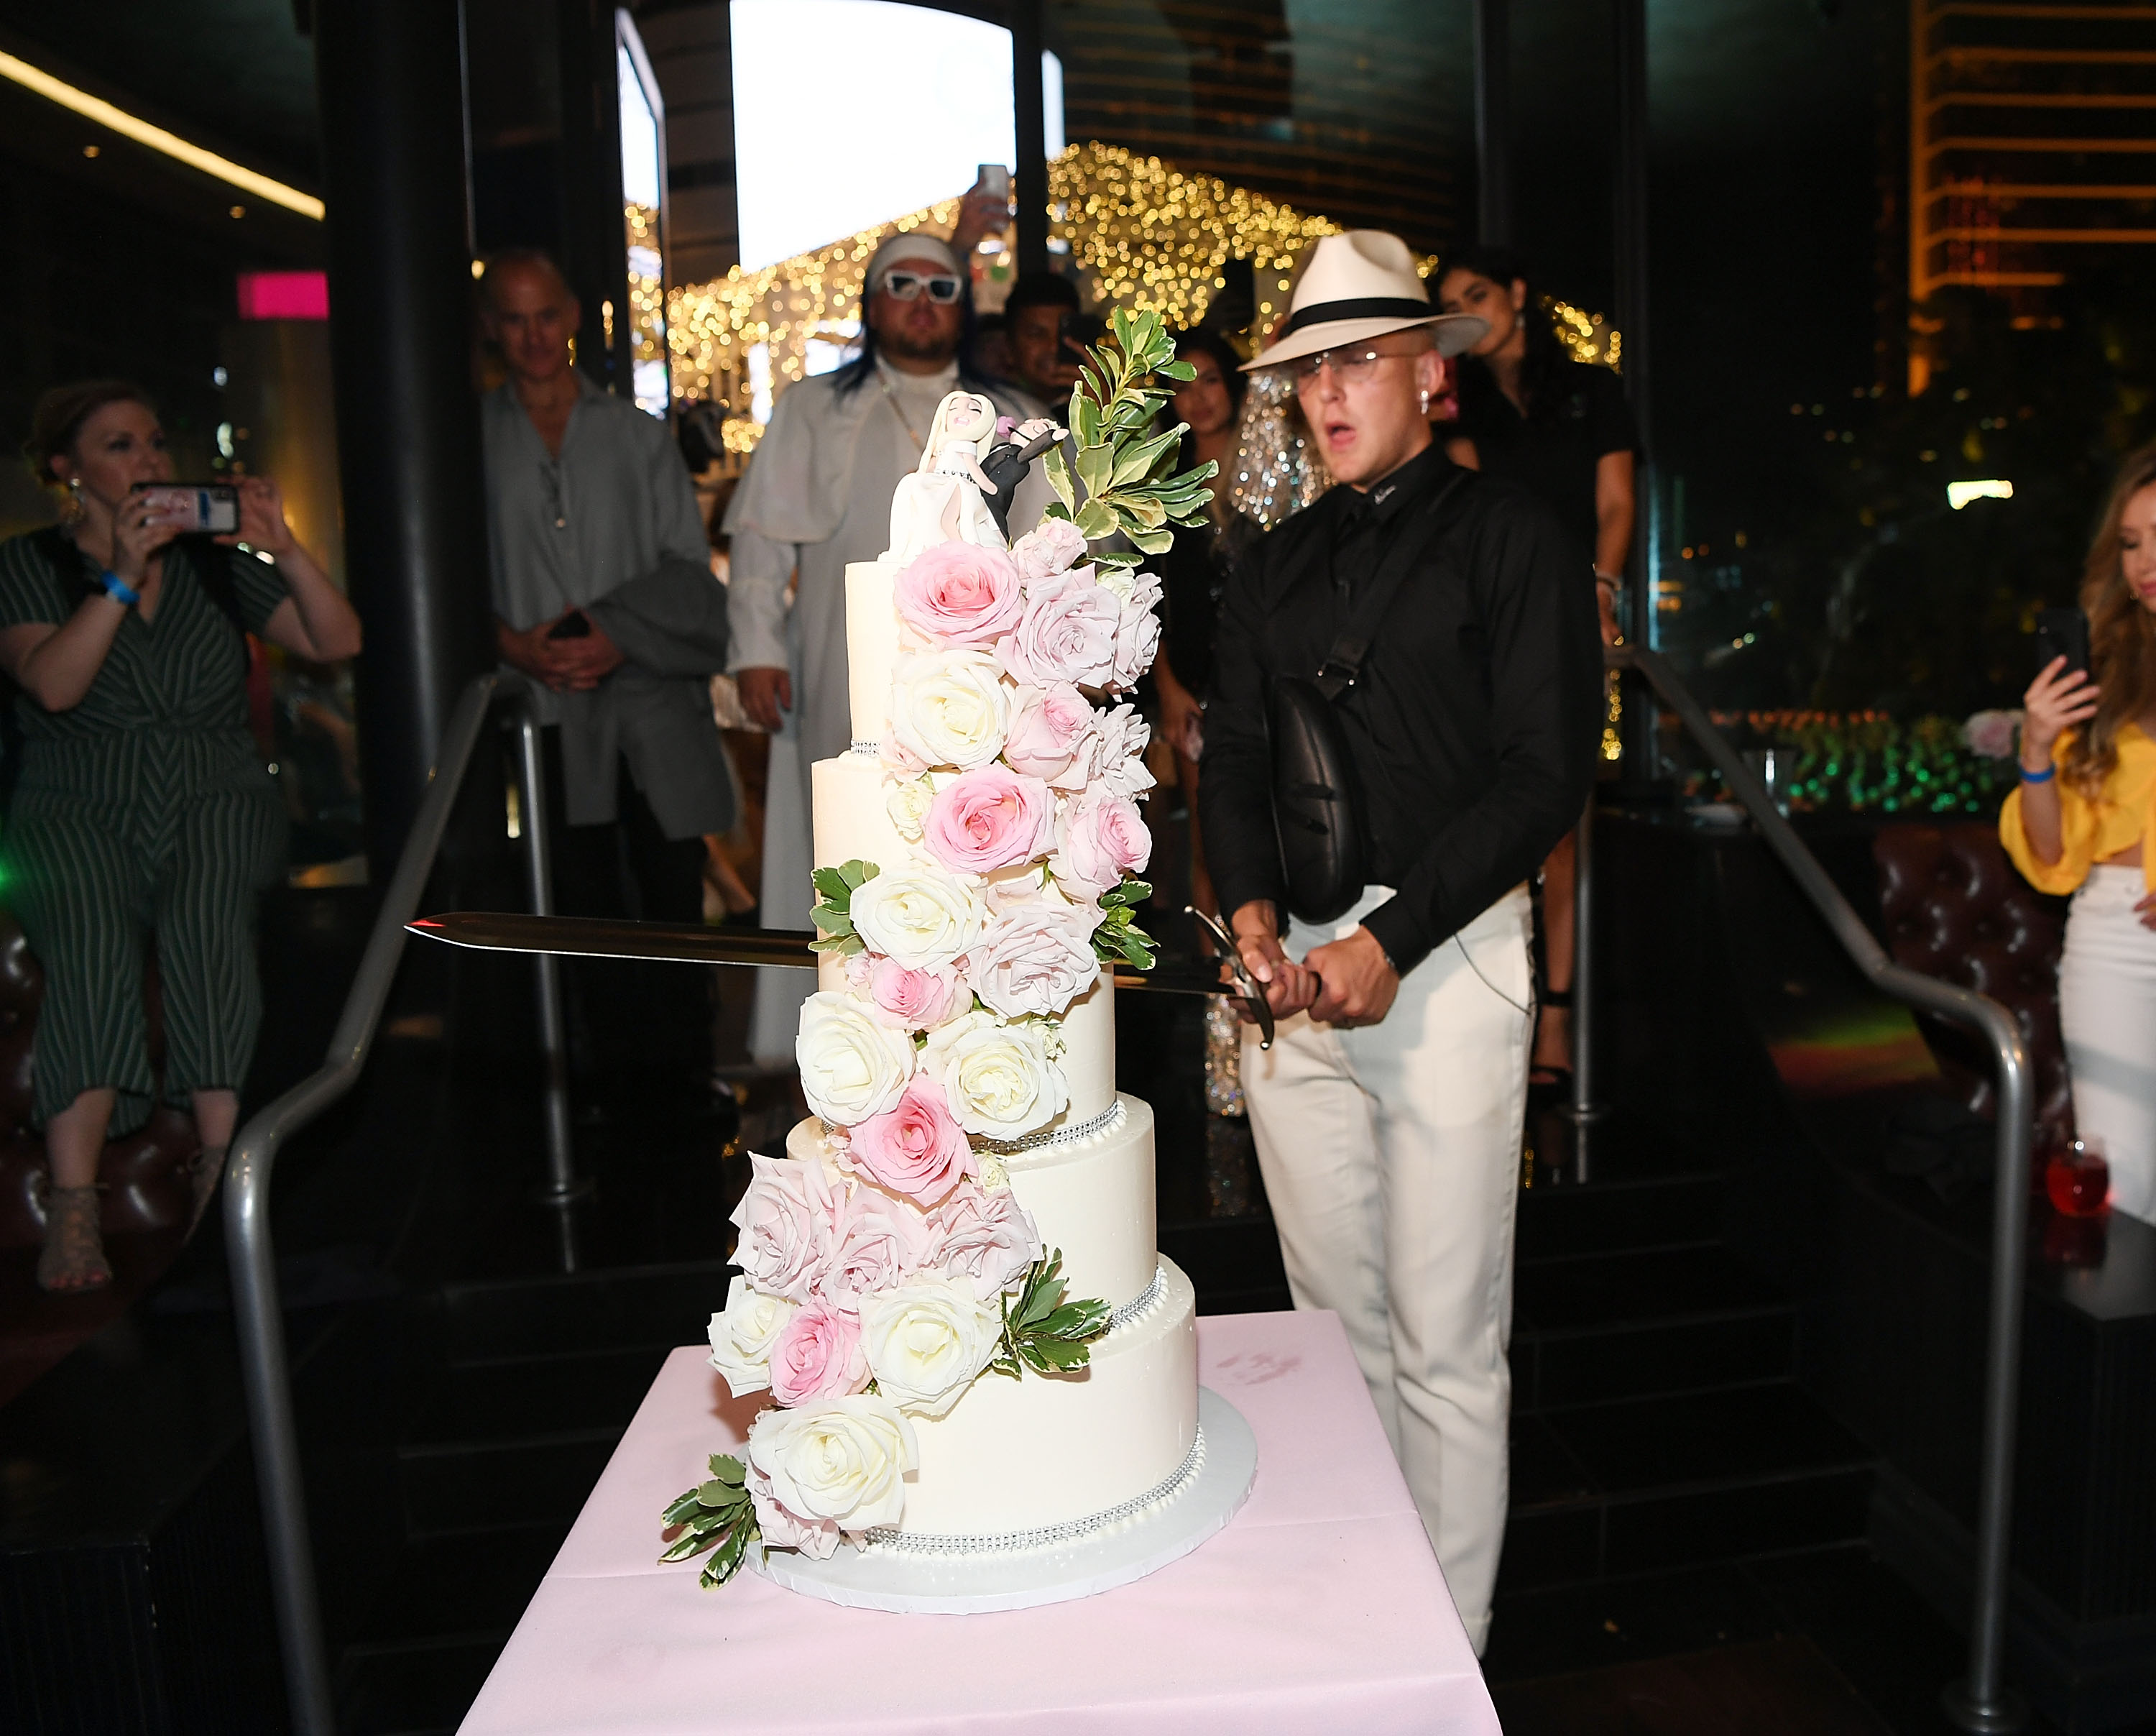 Jake Paul And Tana Mongeau Celebrate Wedding Reception At Sweet Beginnings At Sugar Factory In Las Vegas